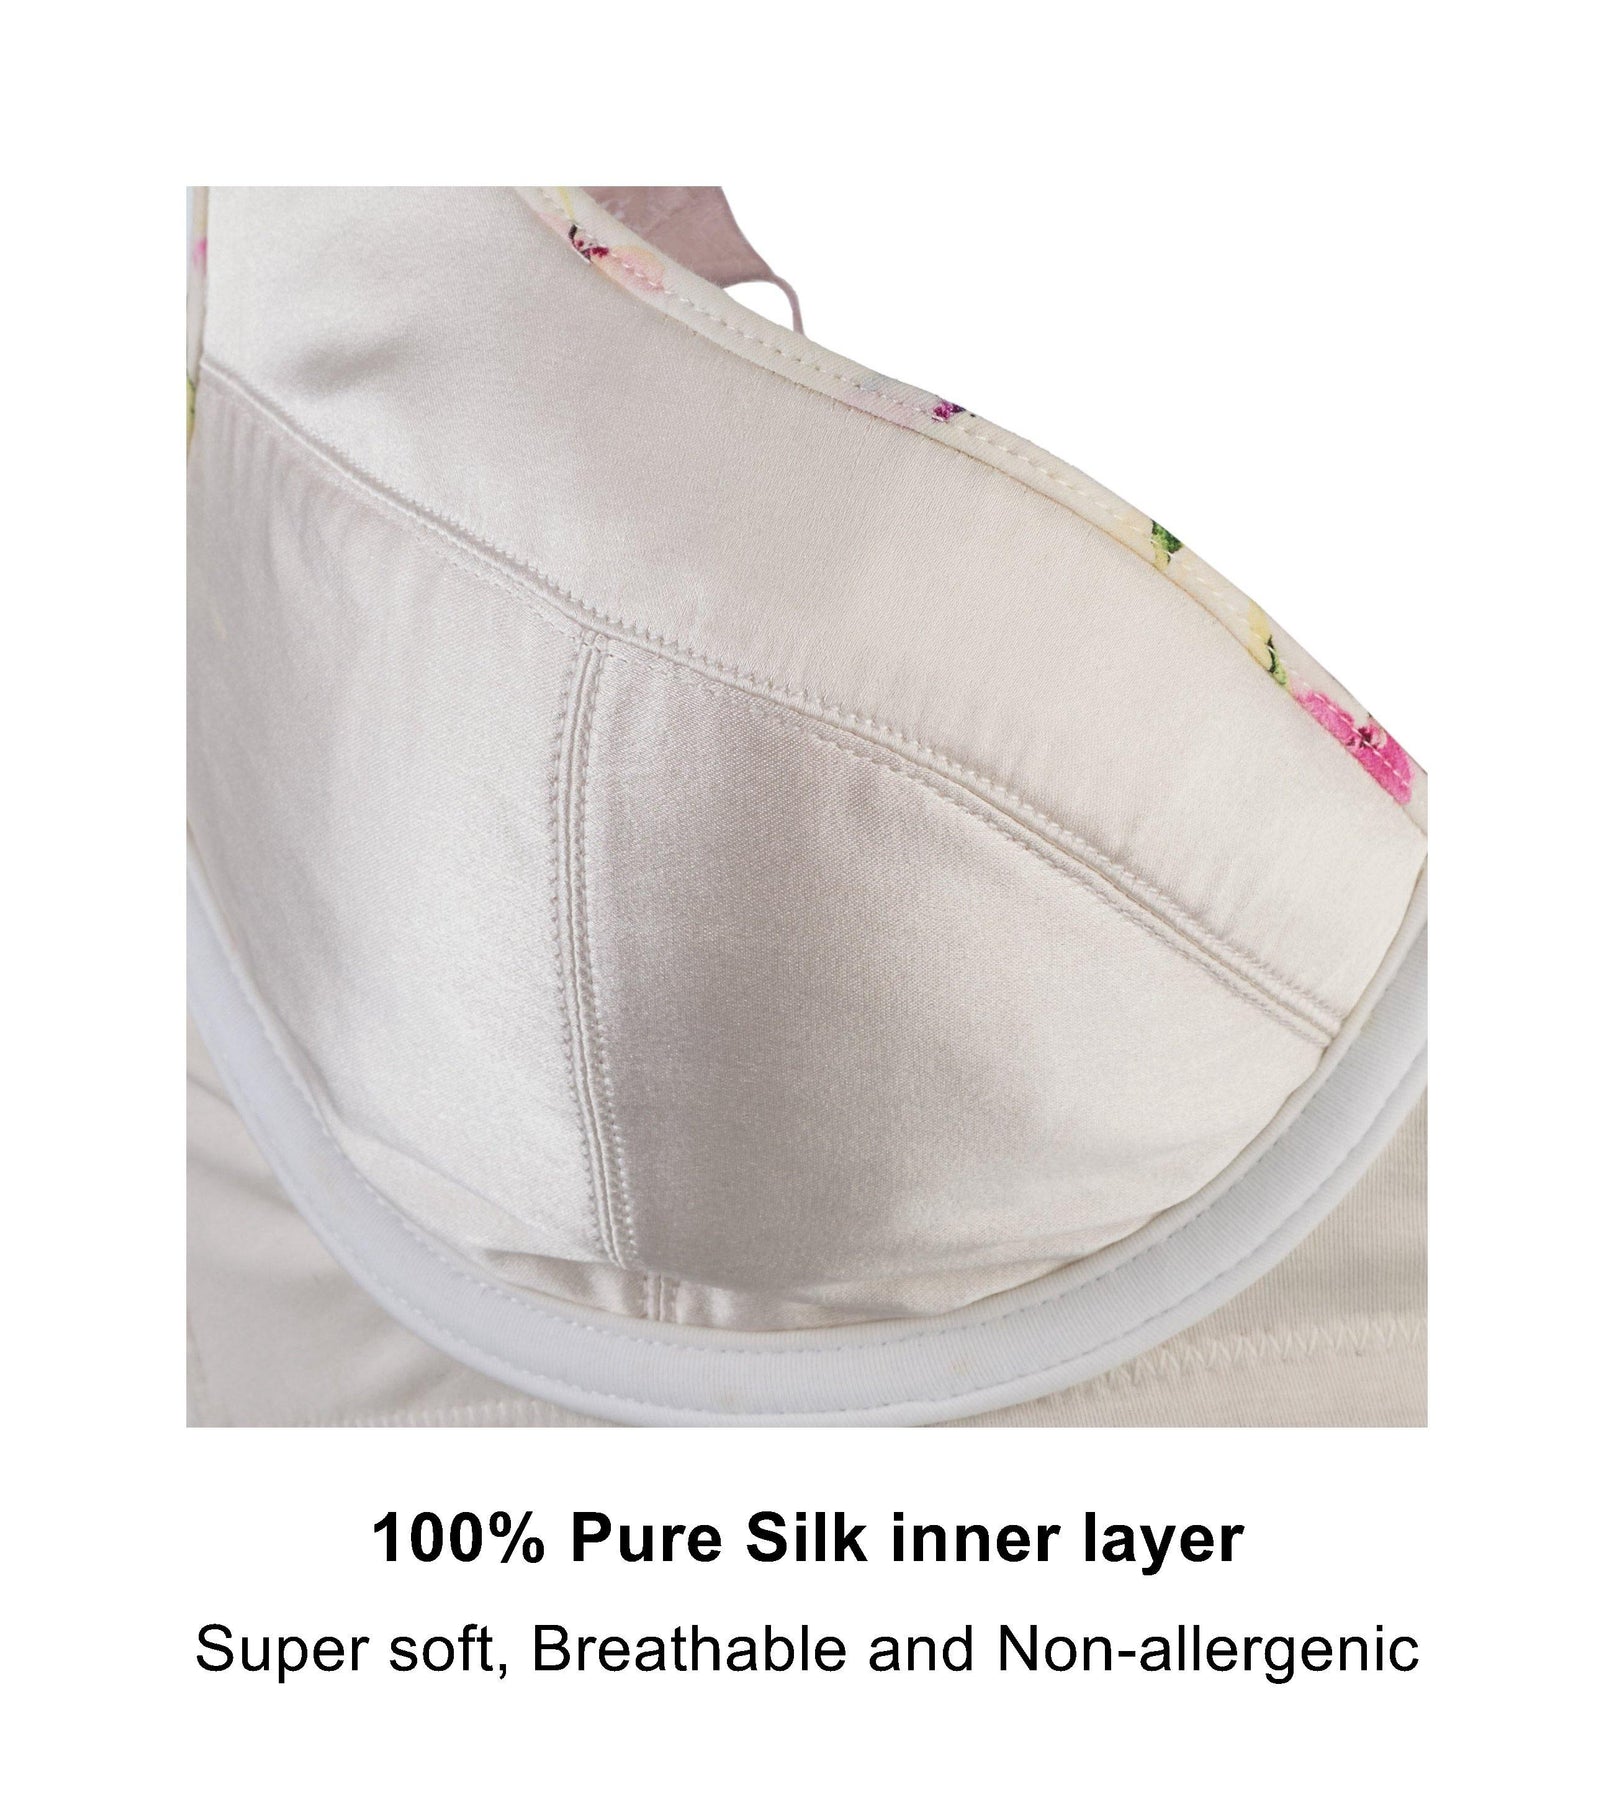 100% Pure Silk and Organic Cotton Wireless Bra - Champagne